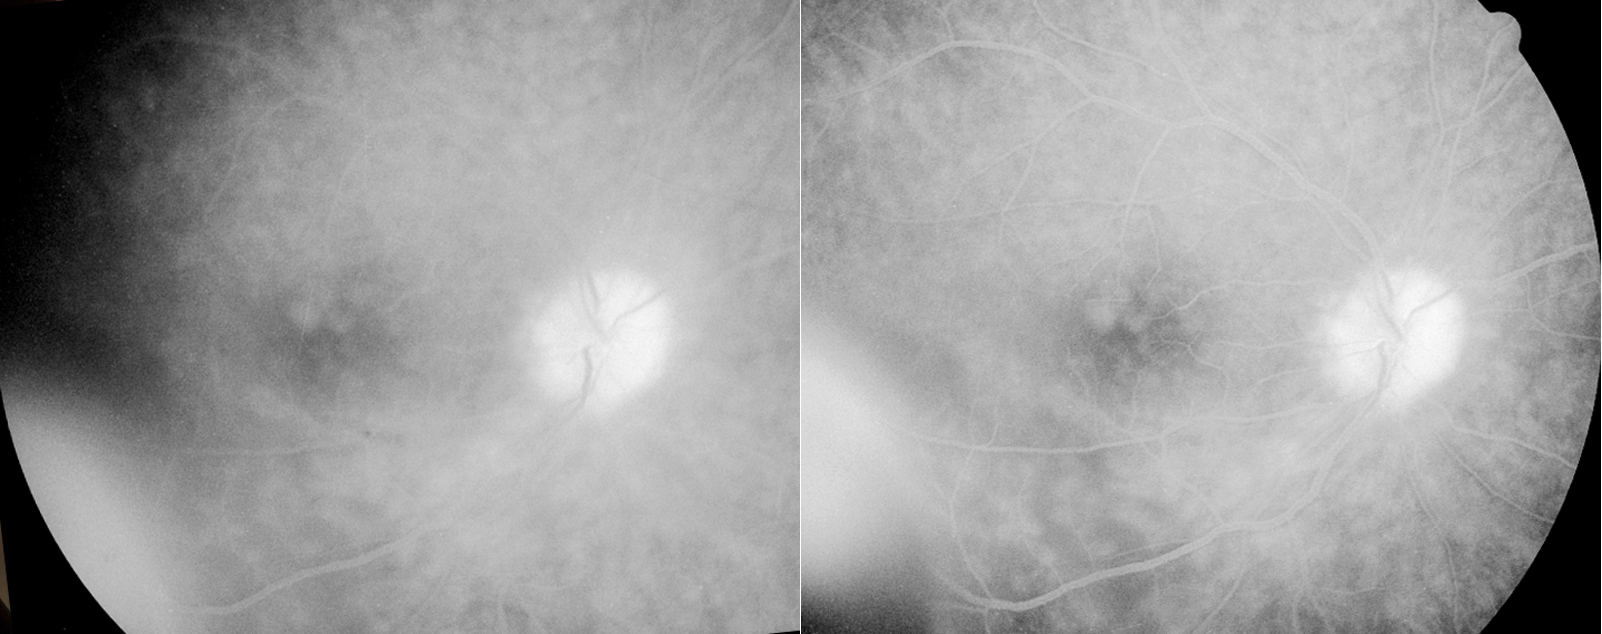 Retinal Vascular Leakage of the macula